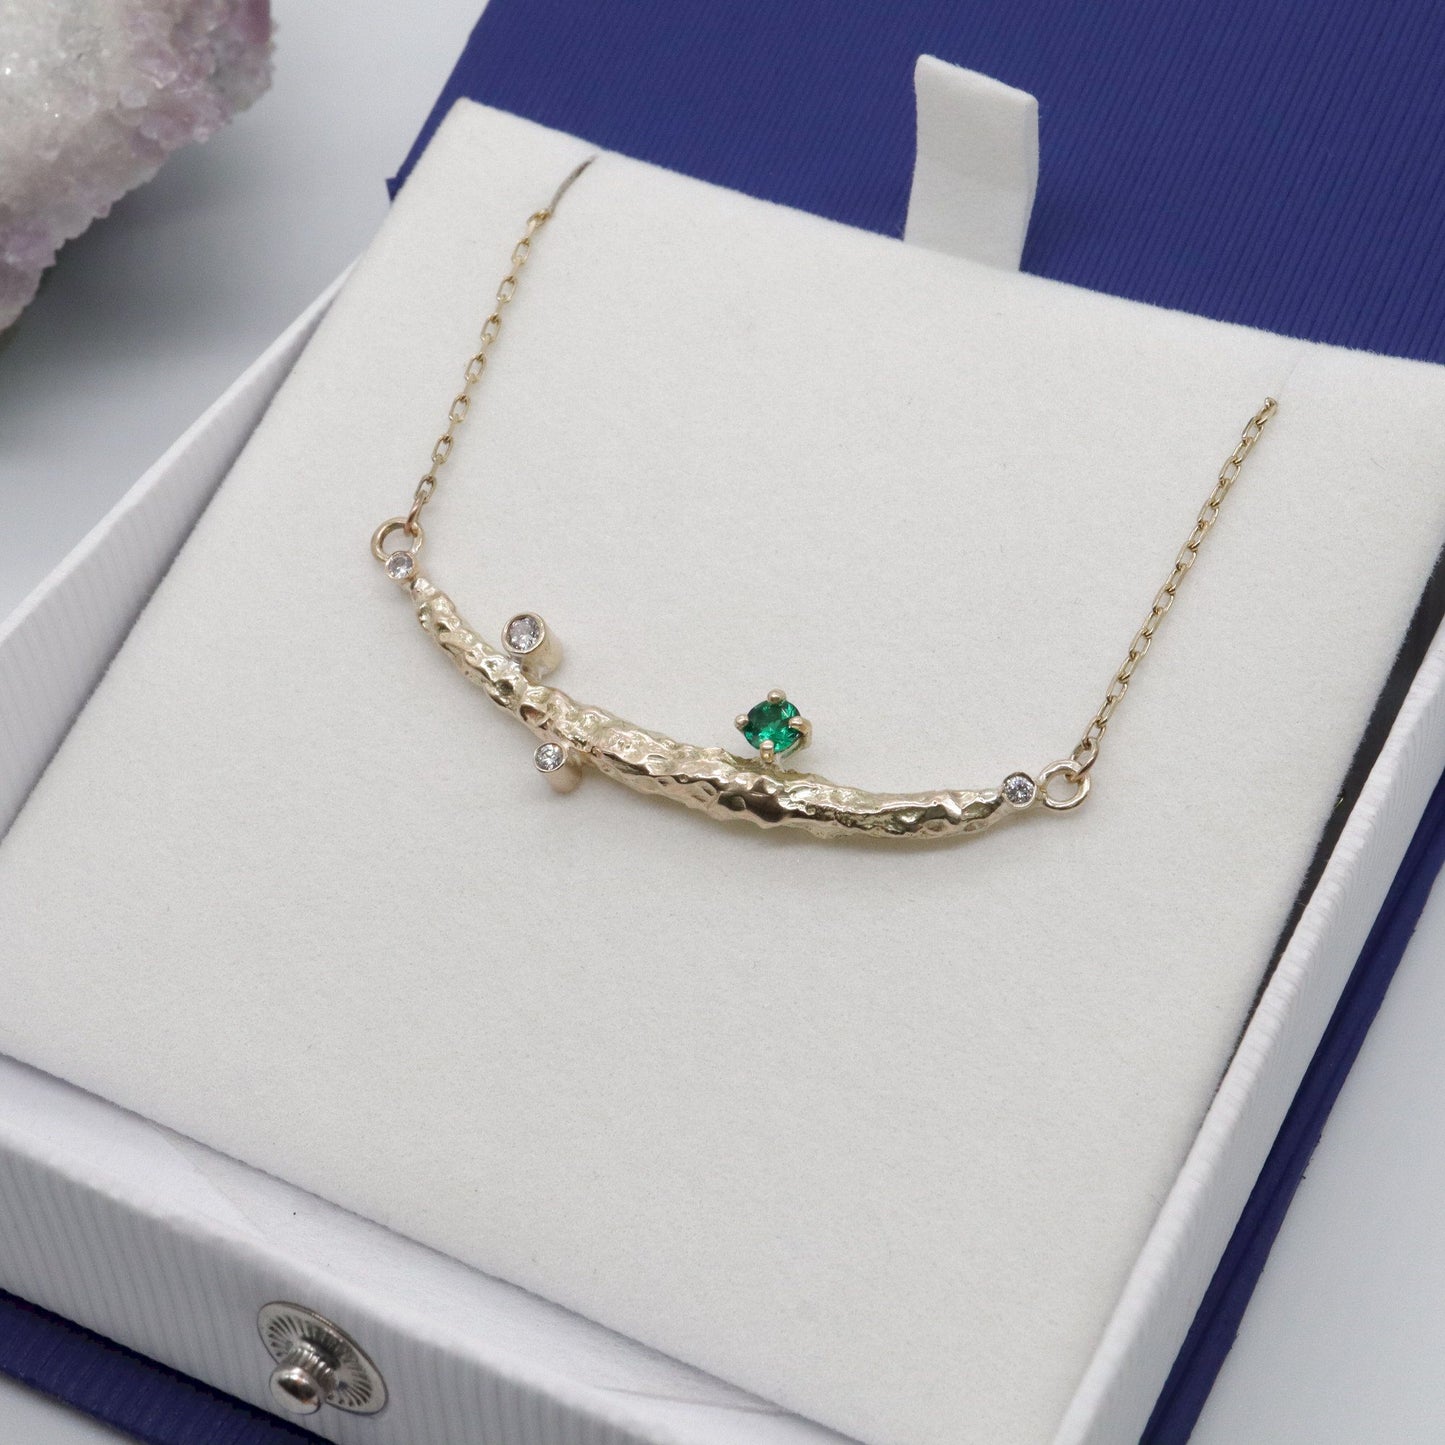 Emerald & diamond pendant - Fells and Lakes limited edition range